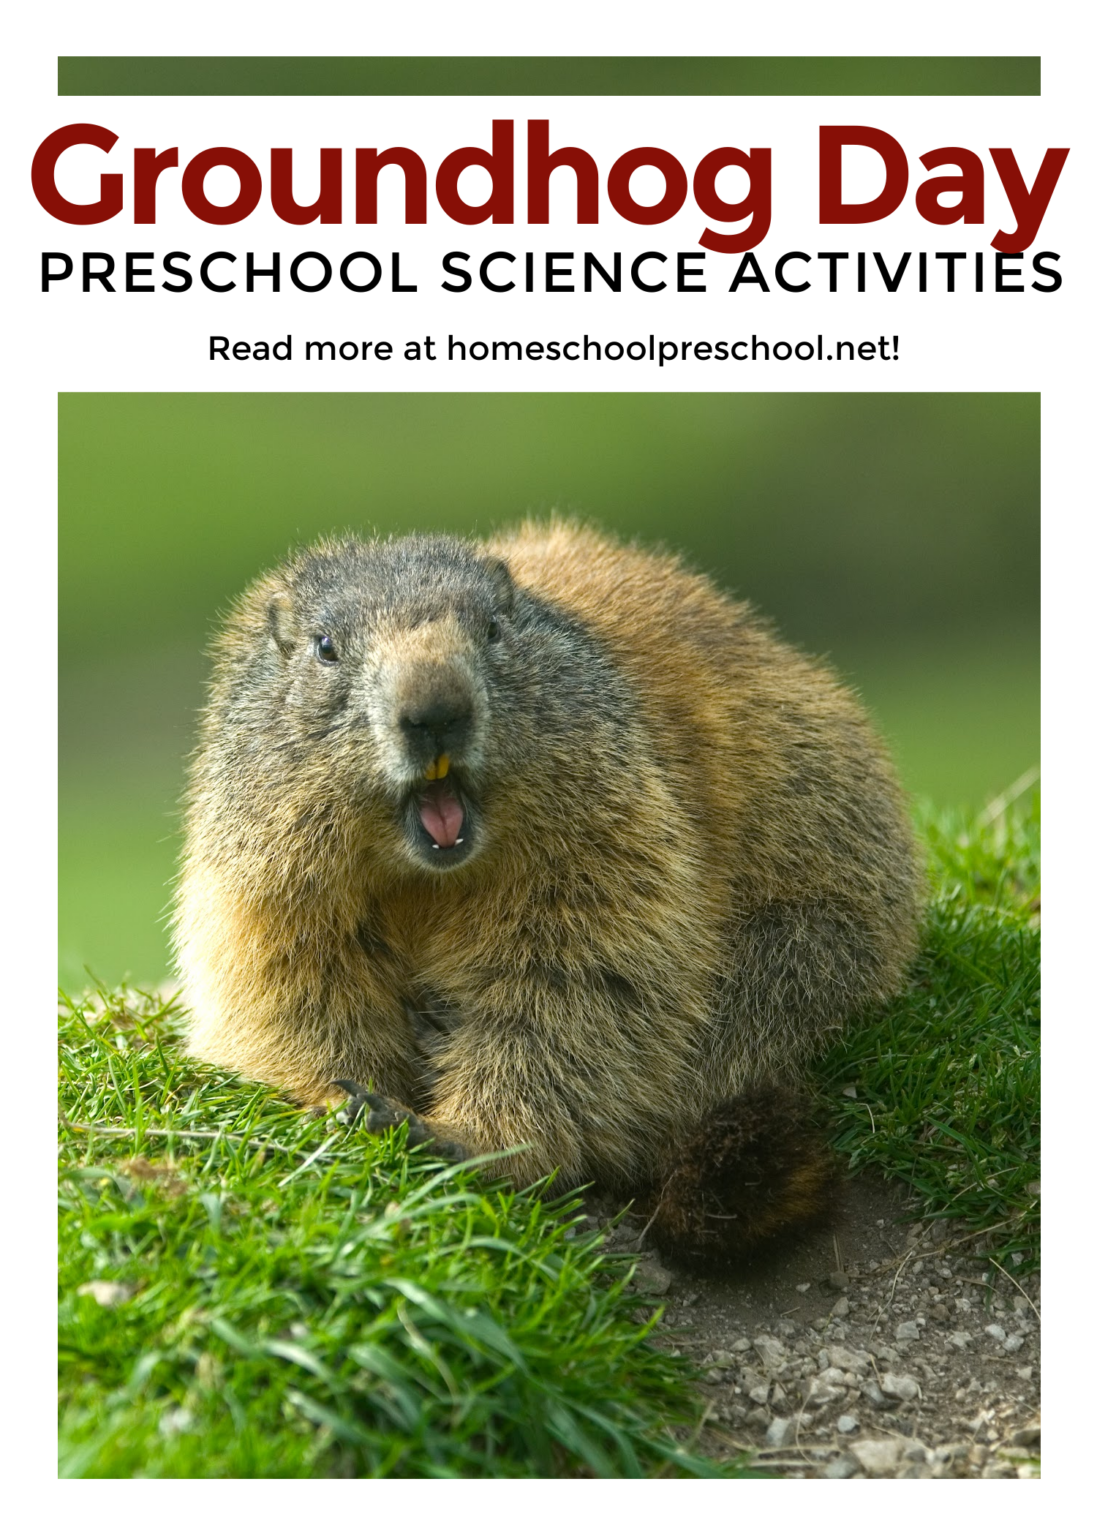 Engaging Groundhog Day Science Activities for Preschoolers